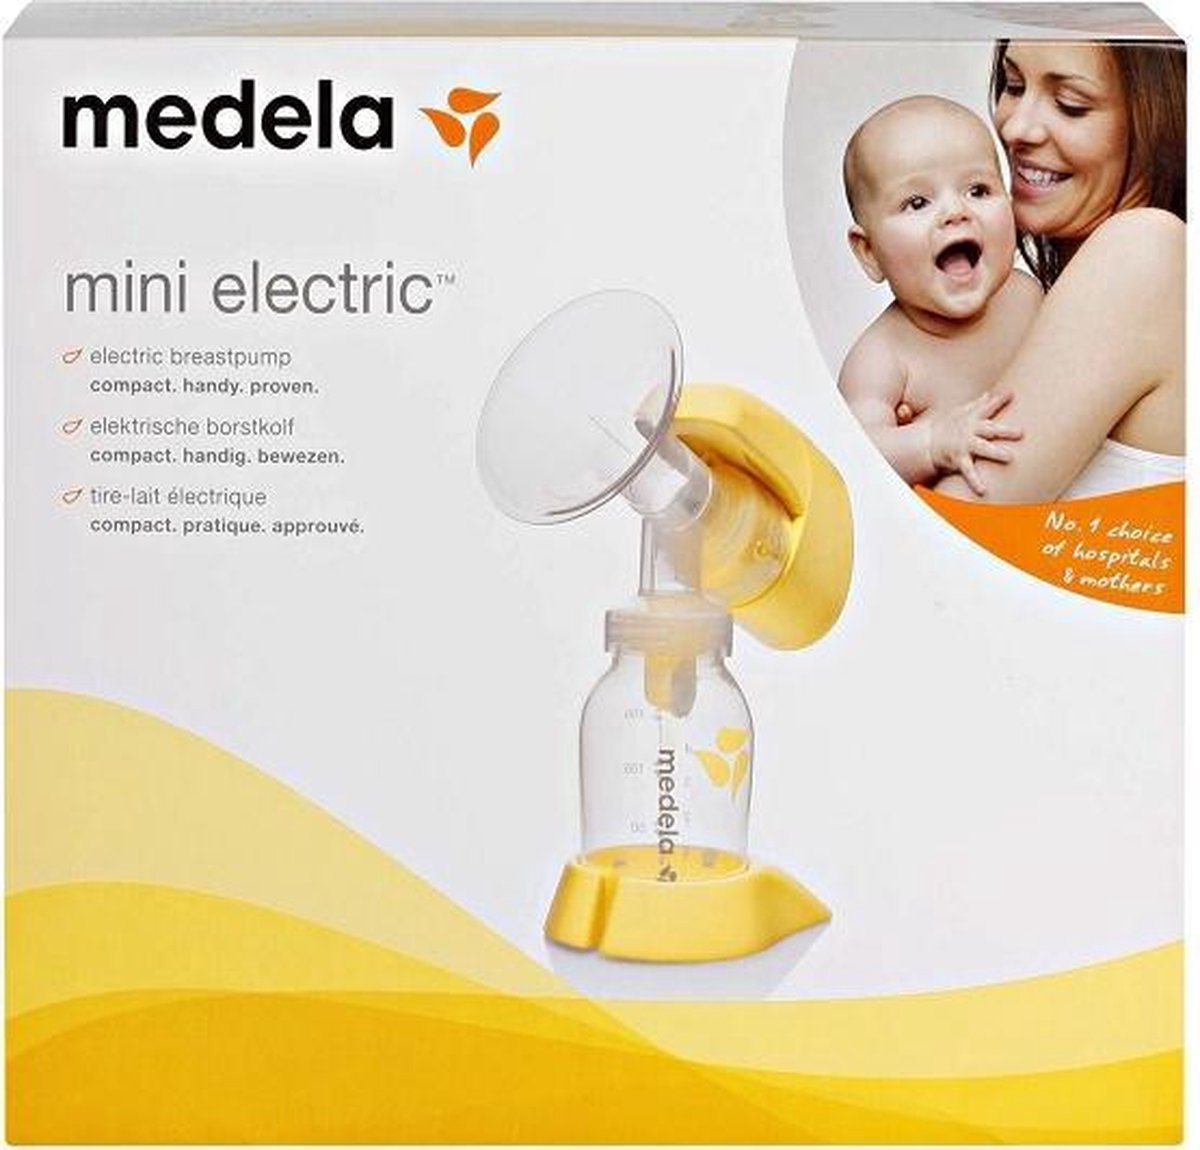 blad Overname Plasticiteit Medela Mini Electric | bol.com